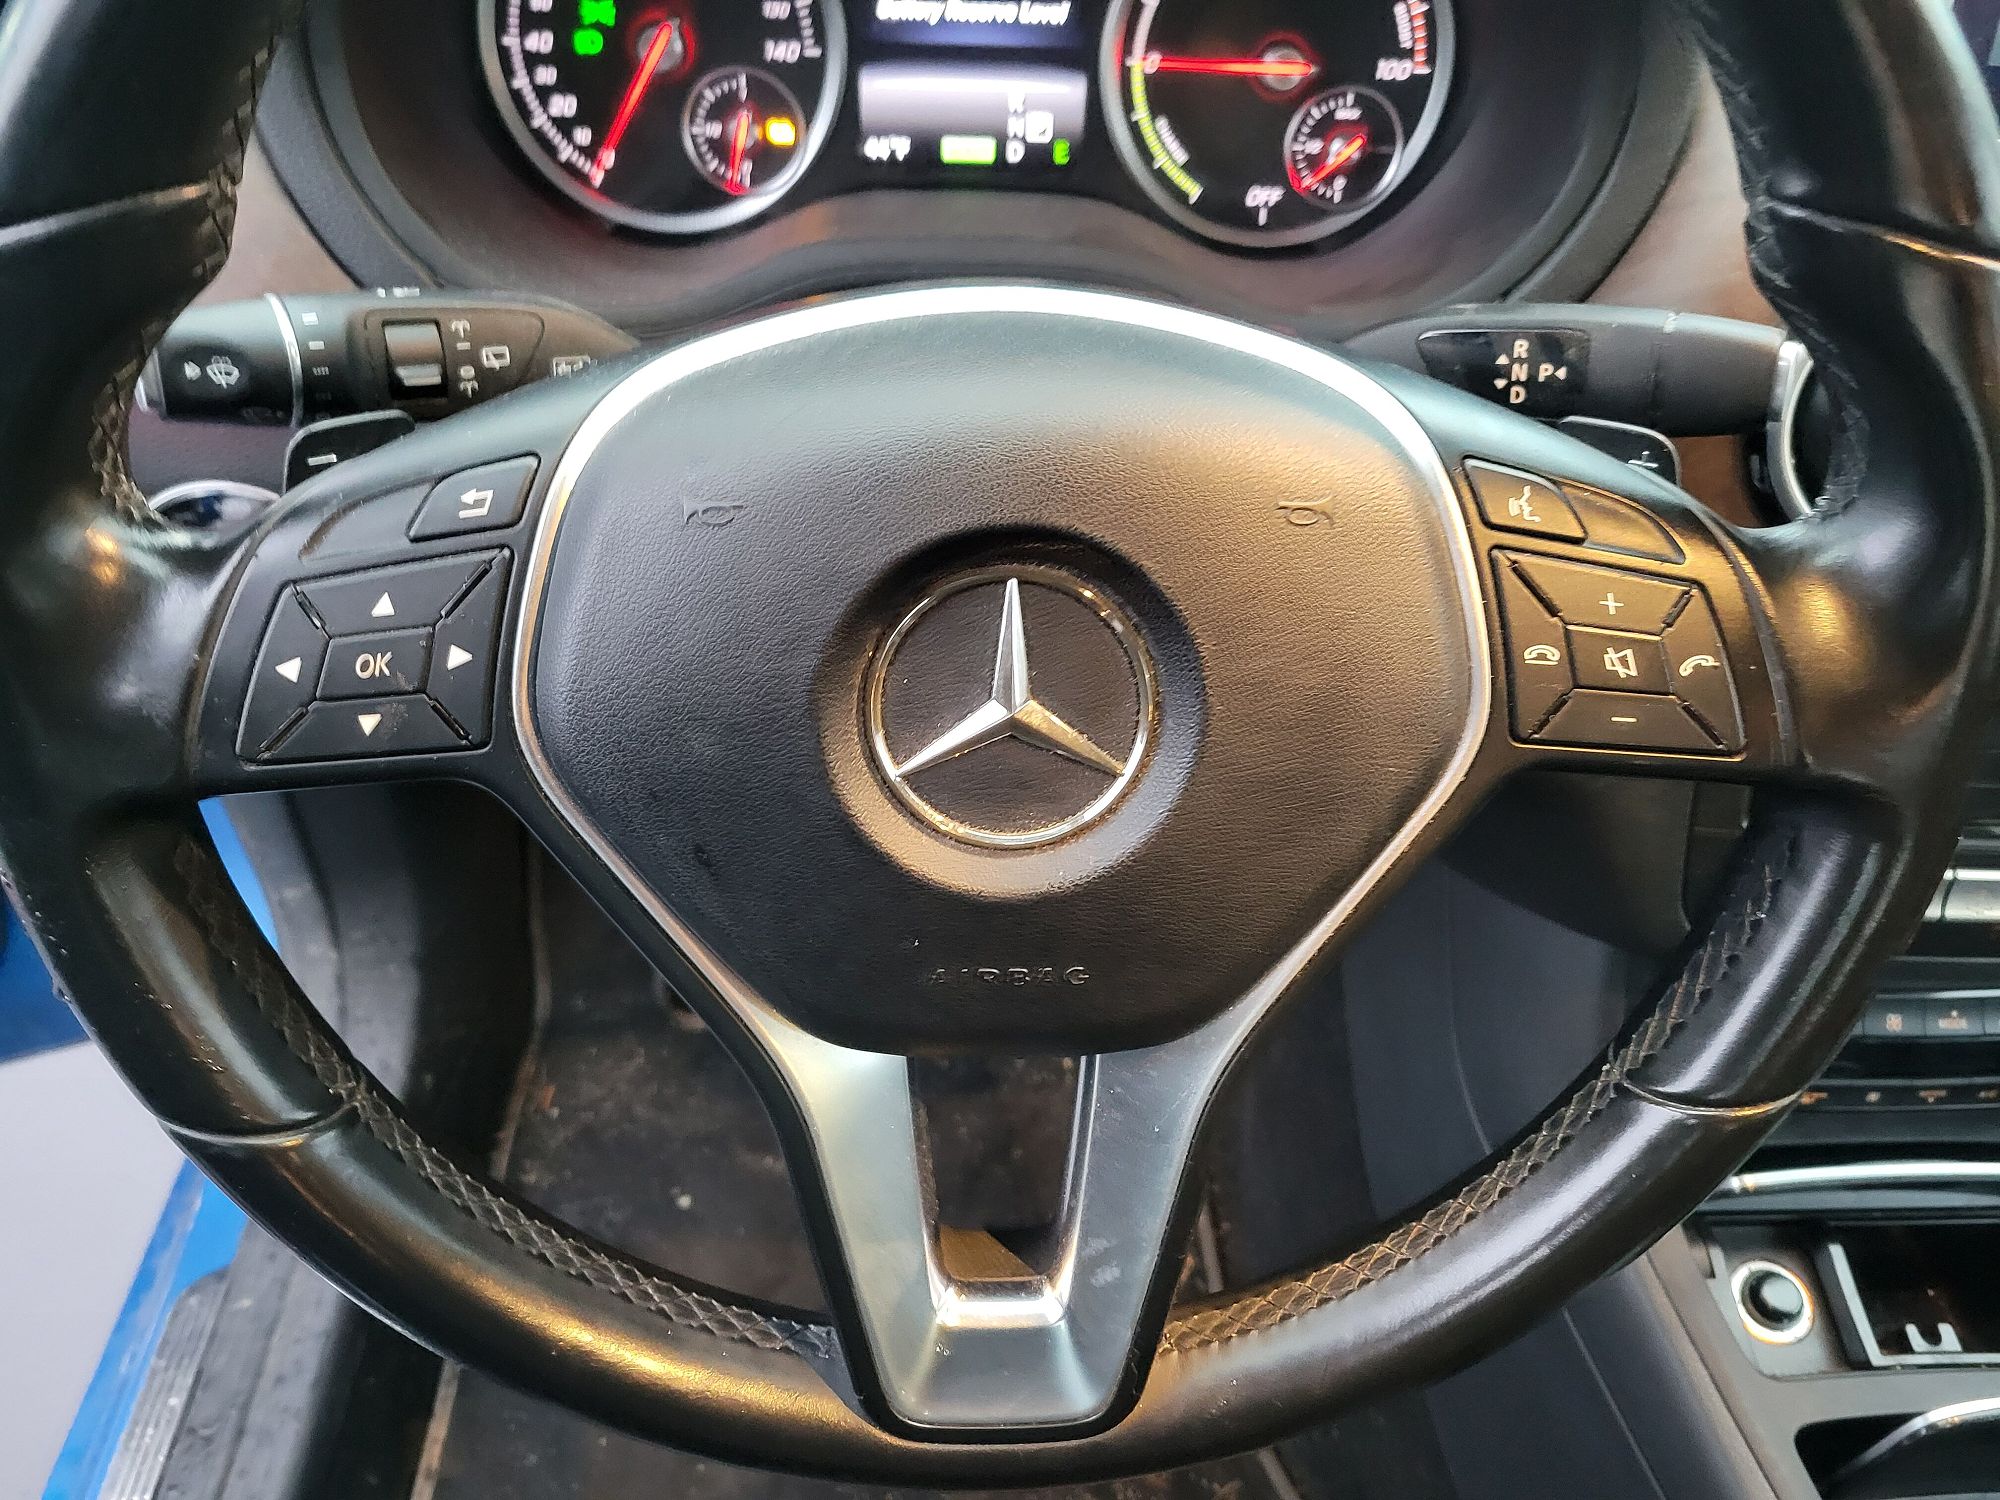 2015 Mercedes-Benz B-Class Electric Drive image 21